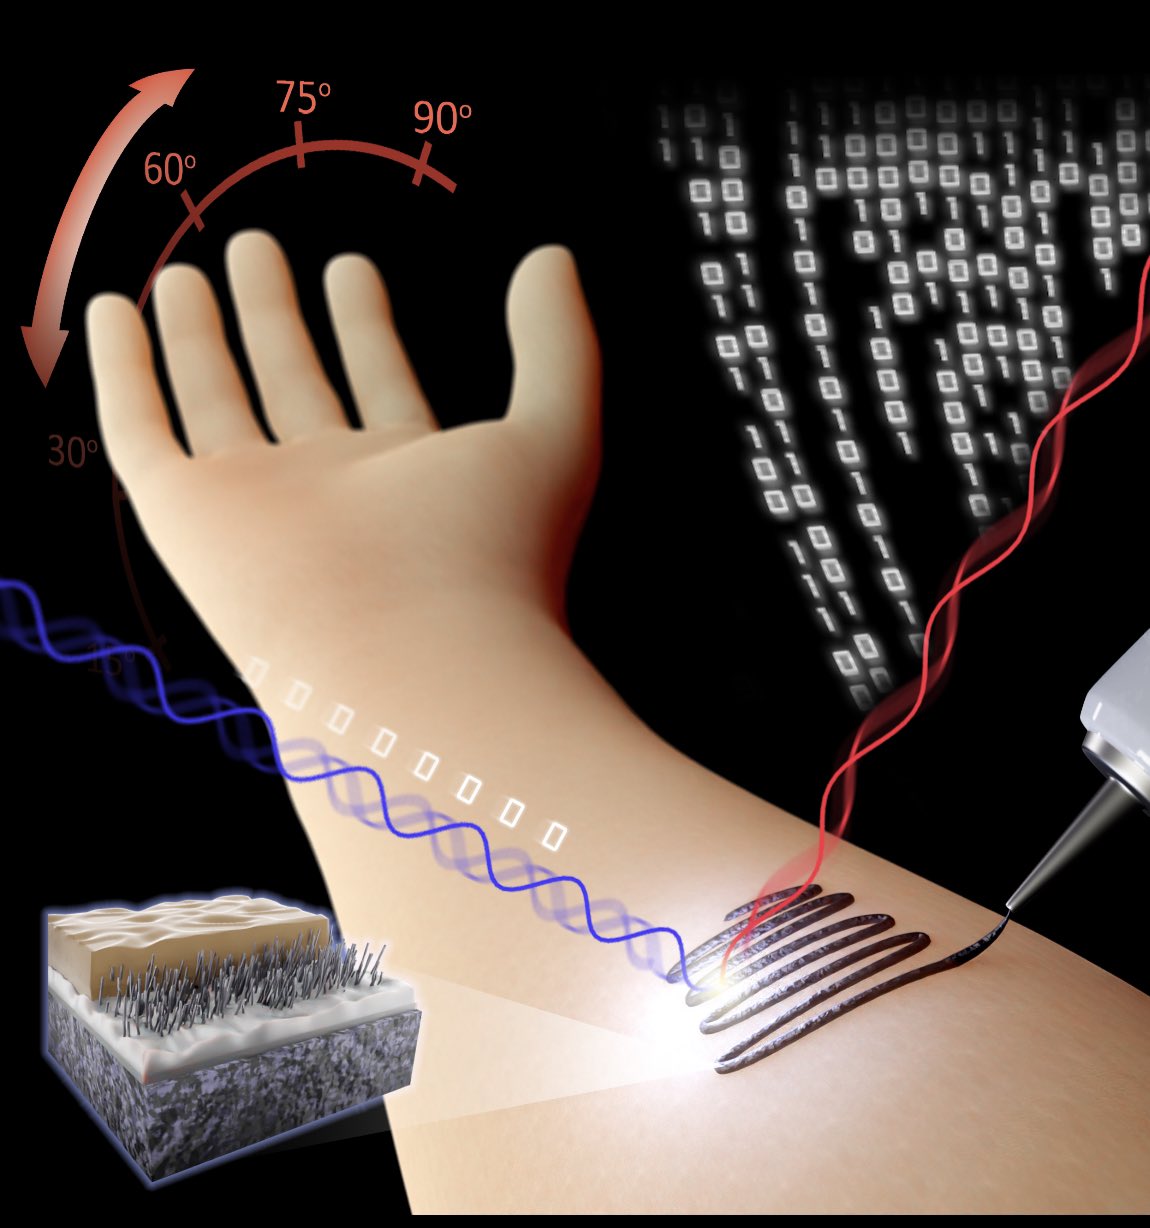 nano dövme sensörü tanımlayan kavramsal görsel